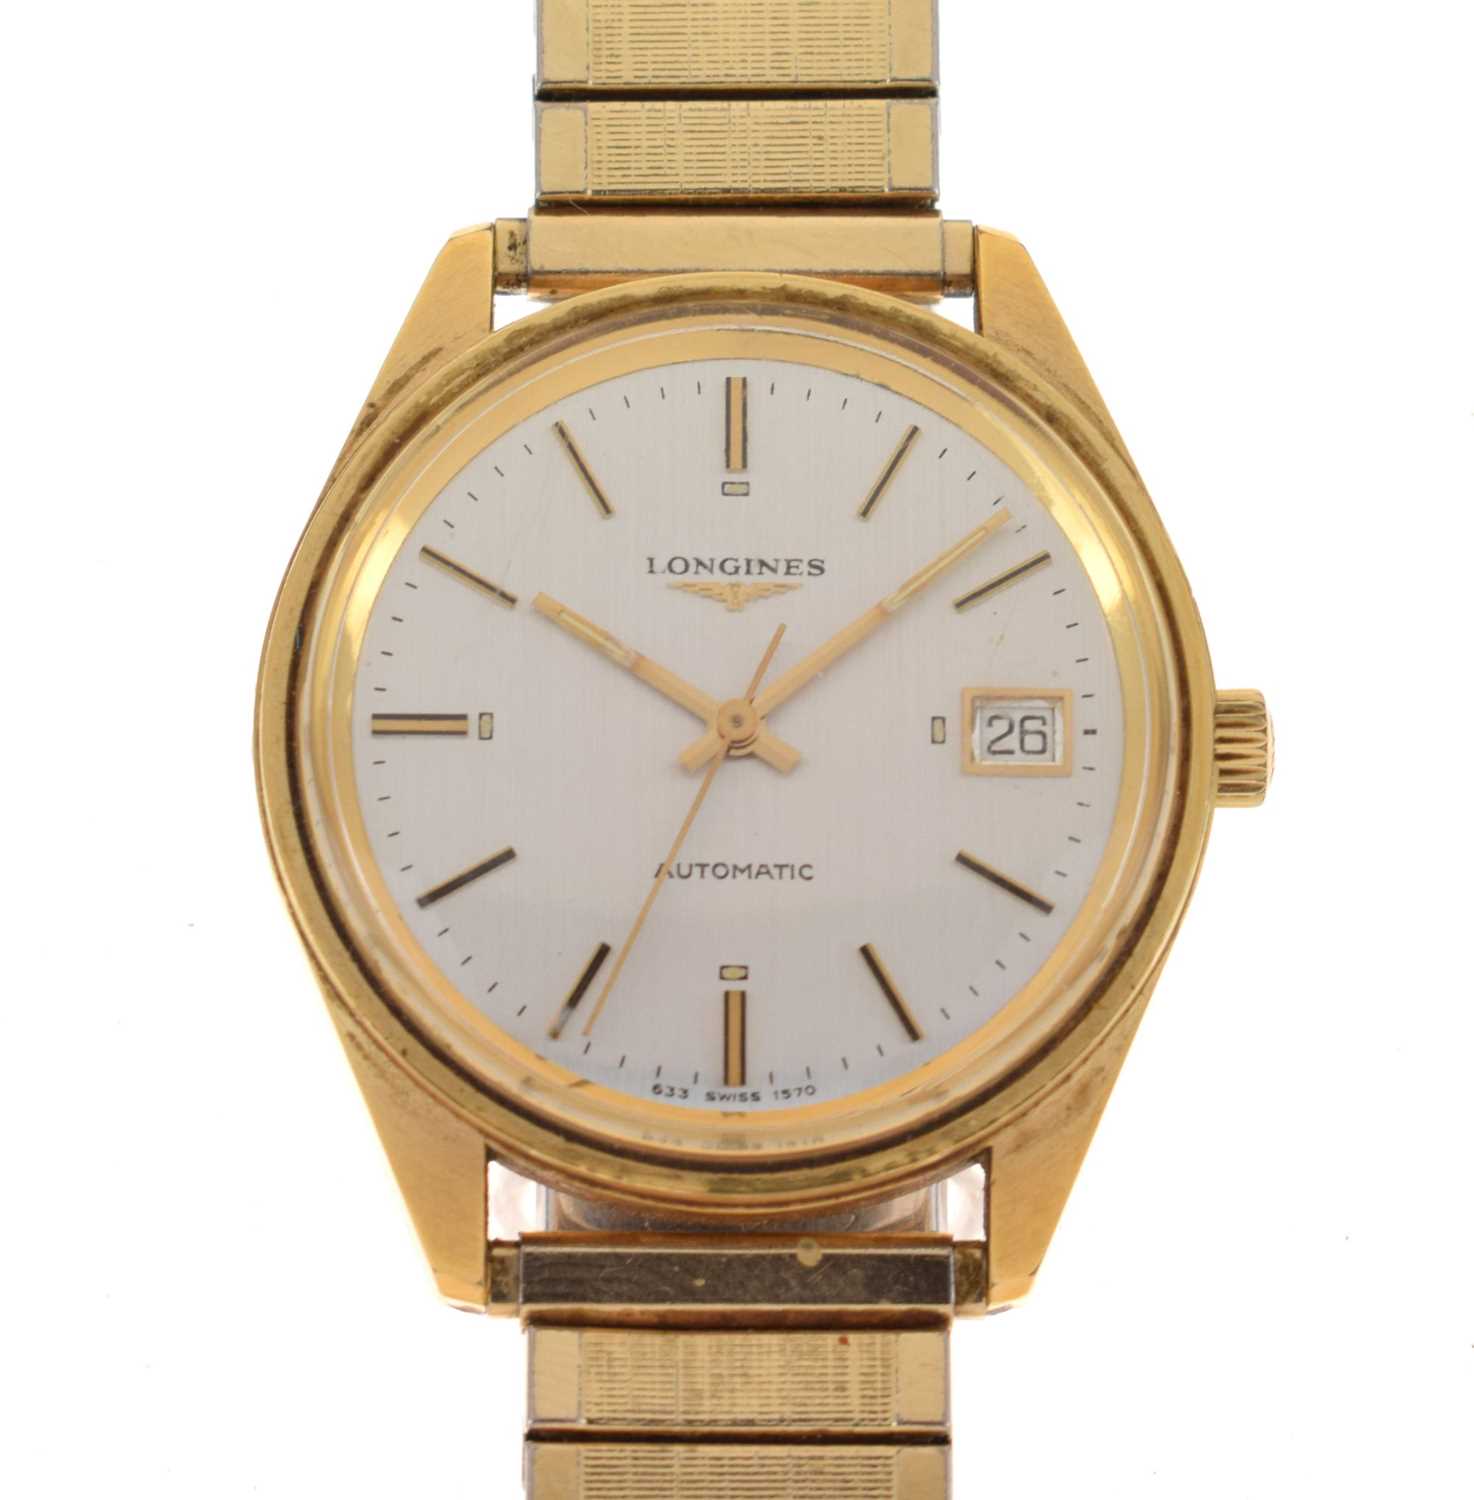 Longines - Gentleman's gold plated automatic bracelet watch